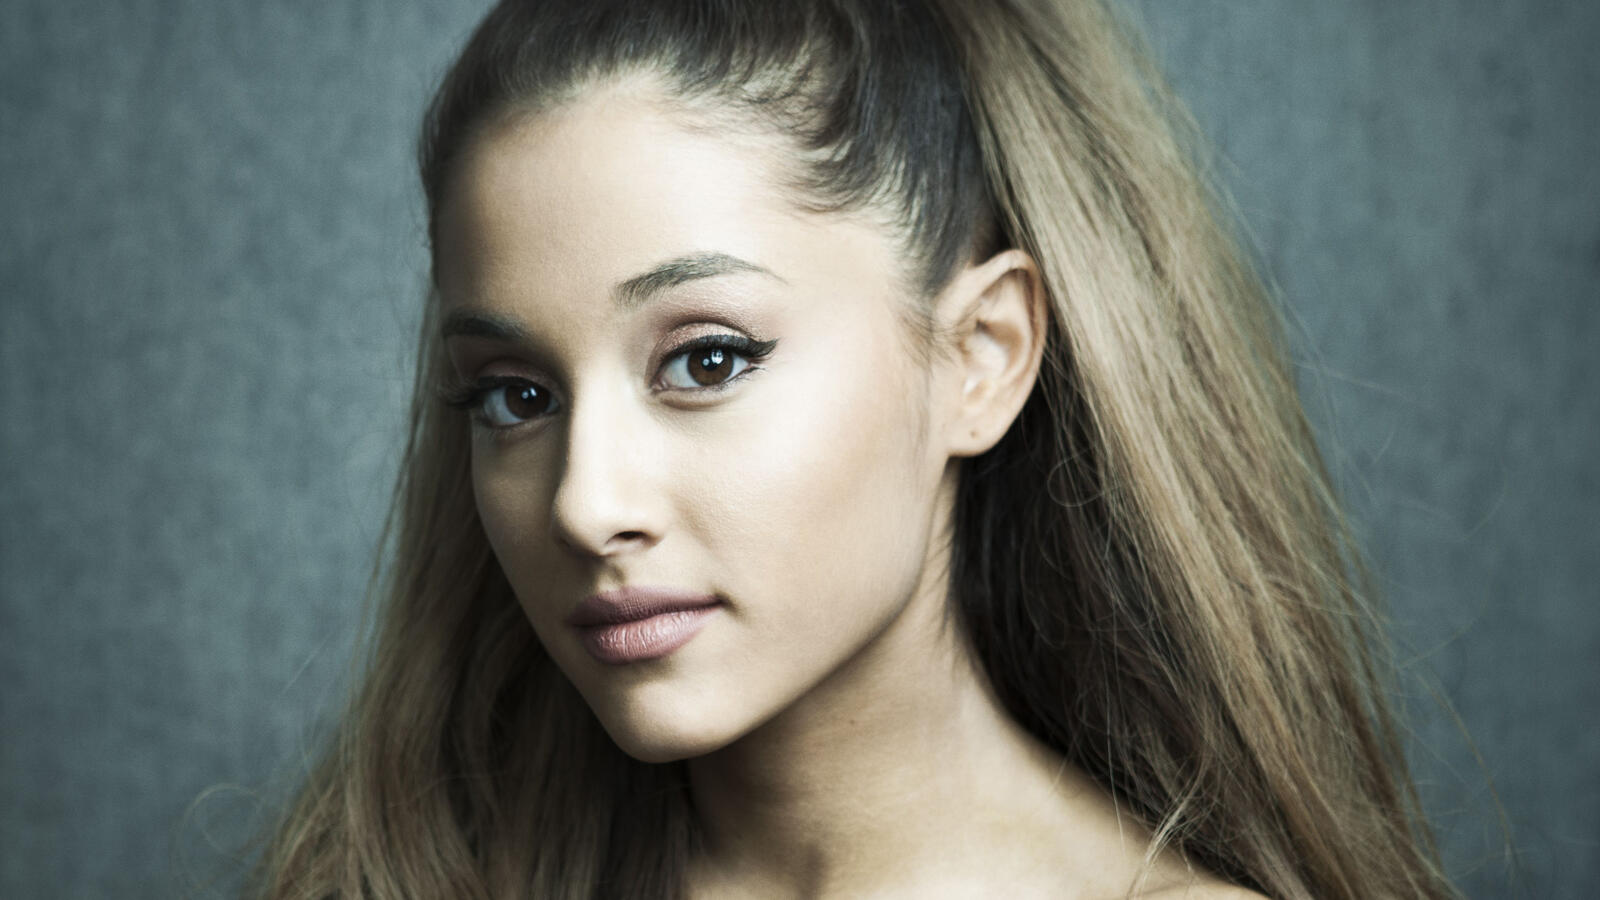 Wallpapers celebrities Ariana Grande sight on the desktop